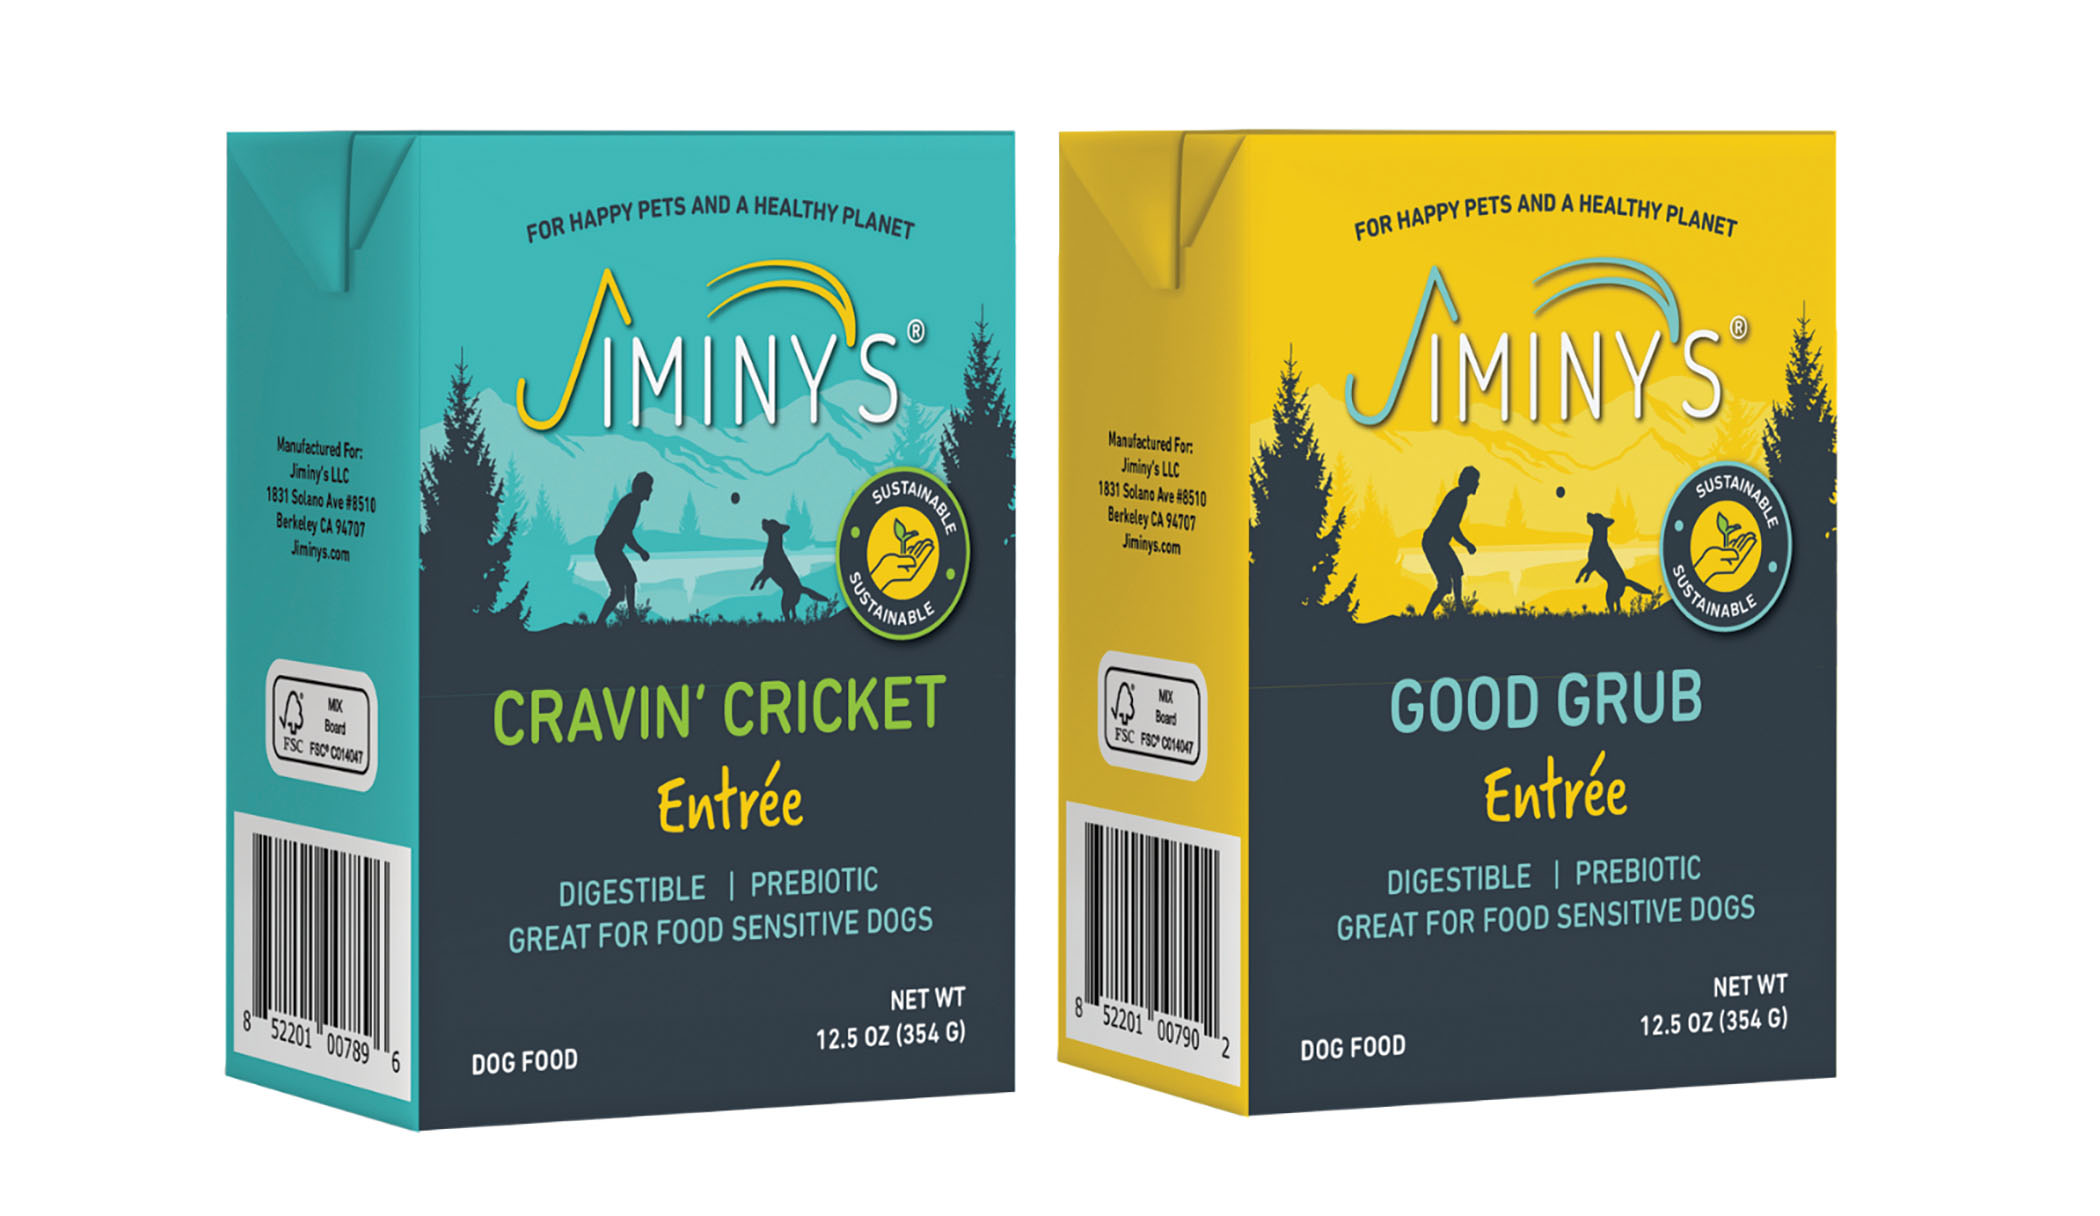 Jiminy's Cravin Cricket Entree and Good Grub Entree wet dog food